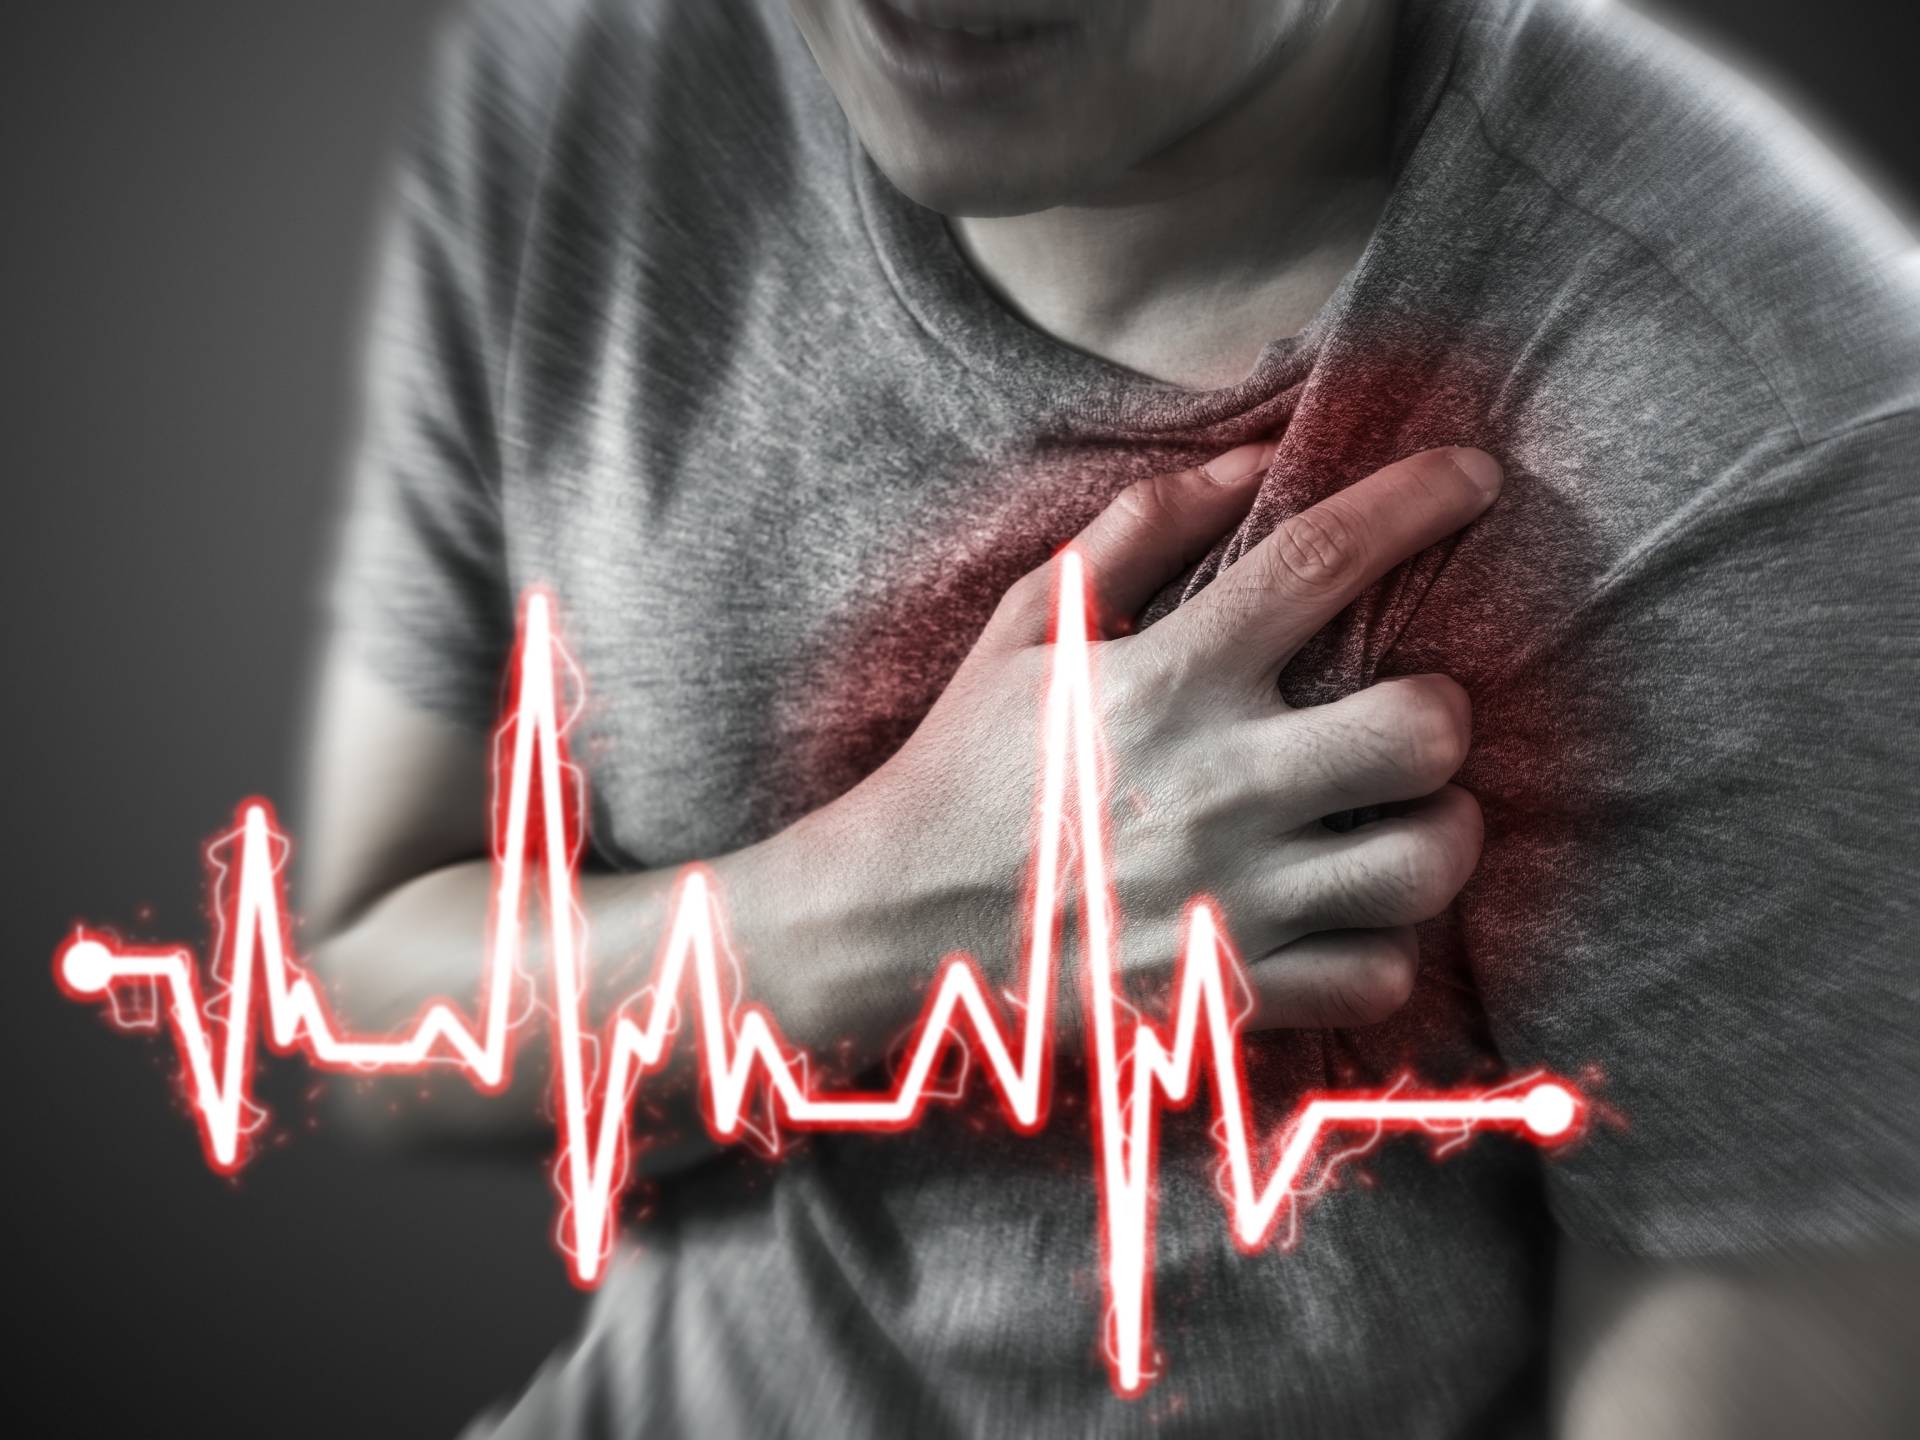 cardiac arrest, cardiac arrest meaning, what is cardiac arrest, cardiac arrest symptoms, cardiac arrest vs heart attack.